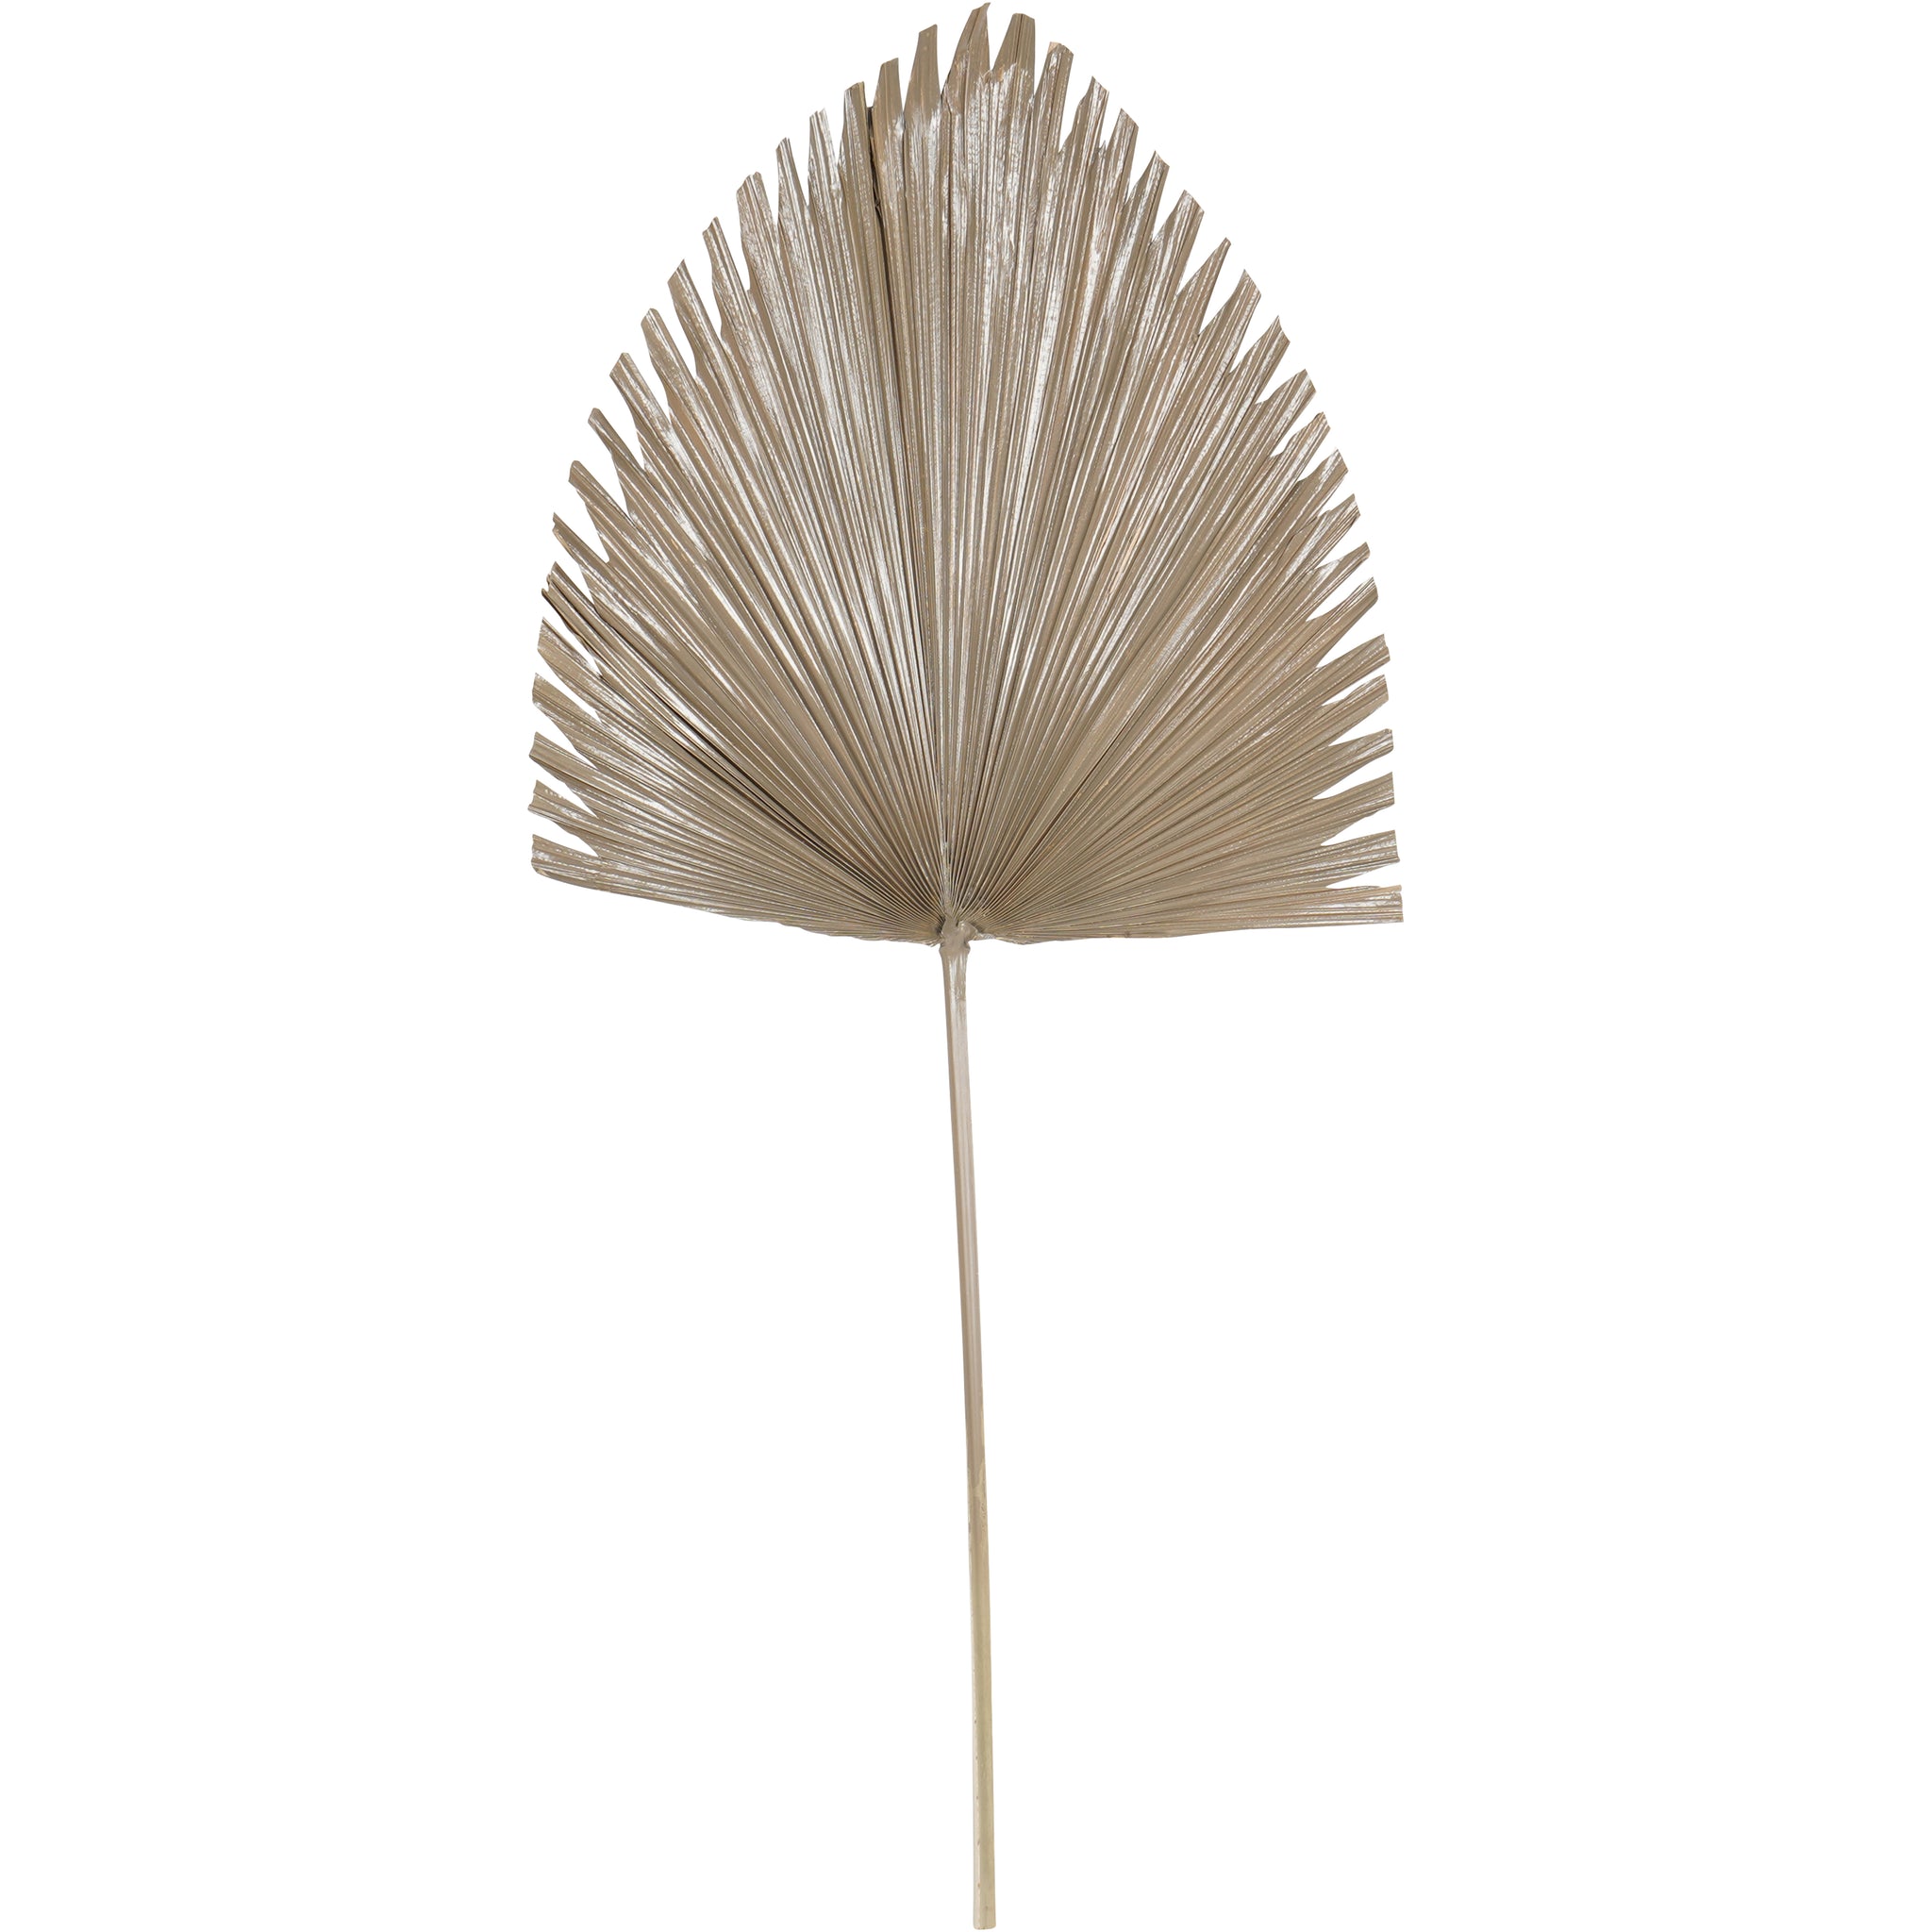 Brown Arrowhead Palm Leaf